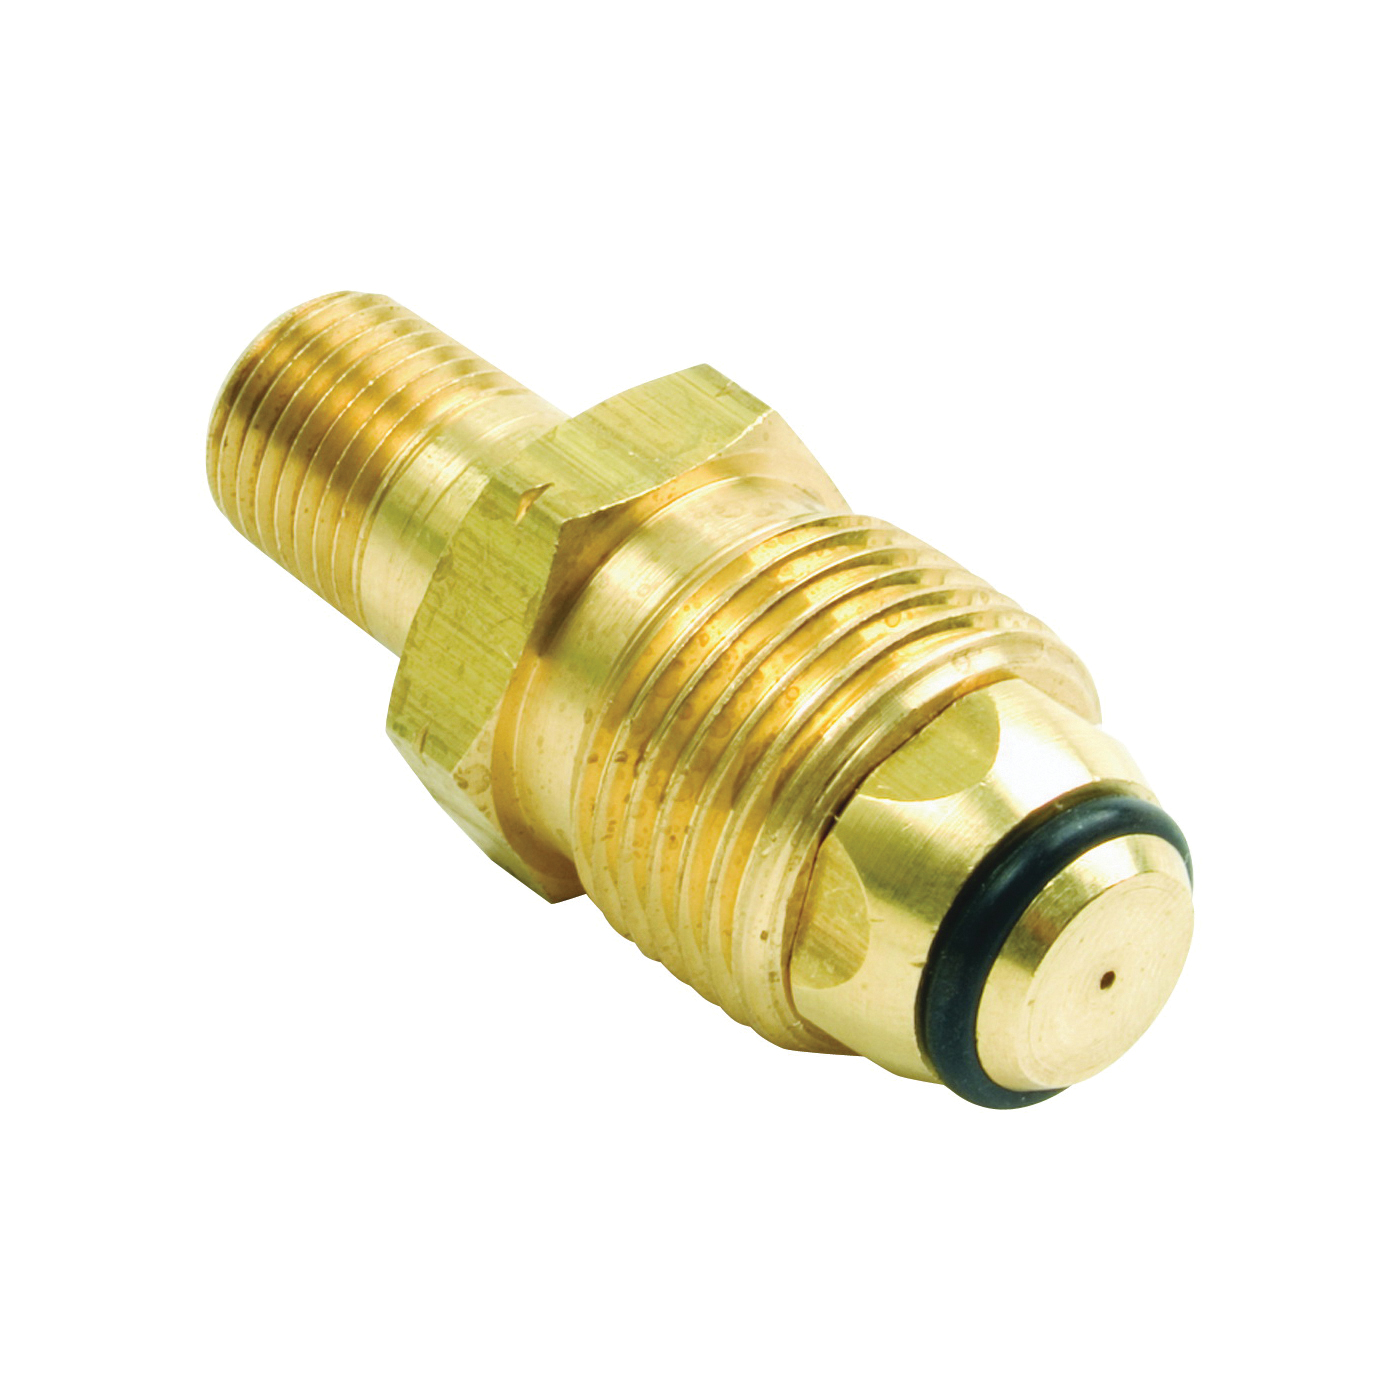 Mr. Heater F276139 Cylinder Adapter, Brass - 1